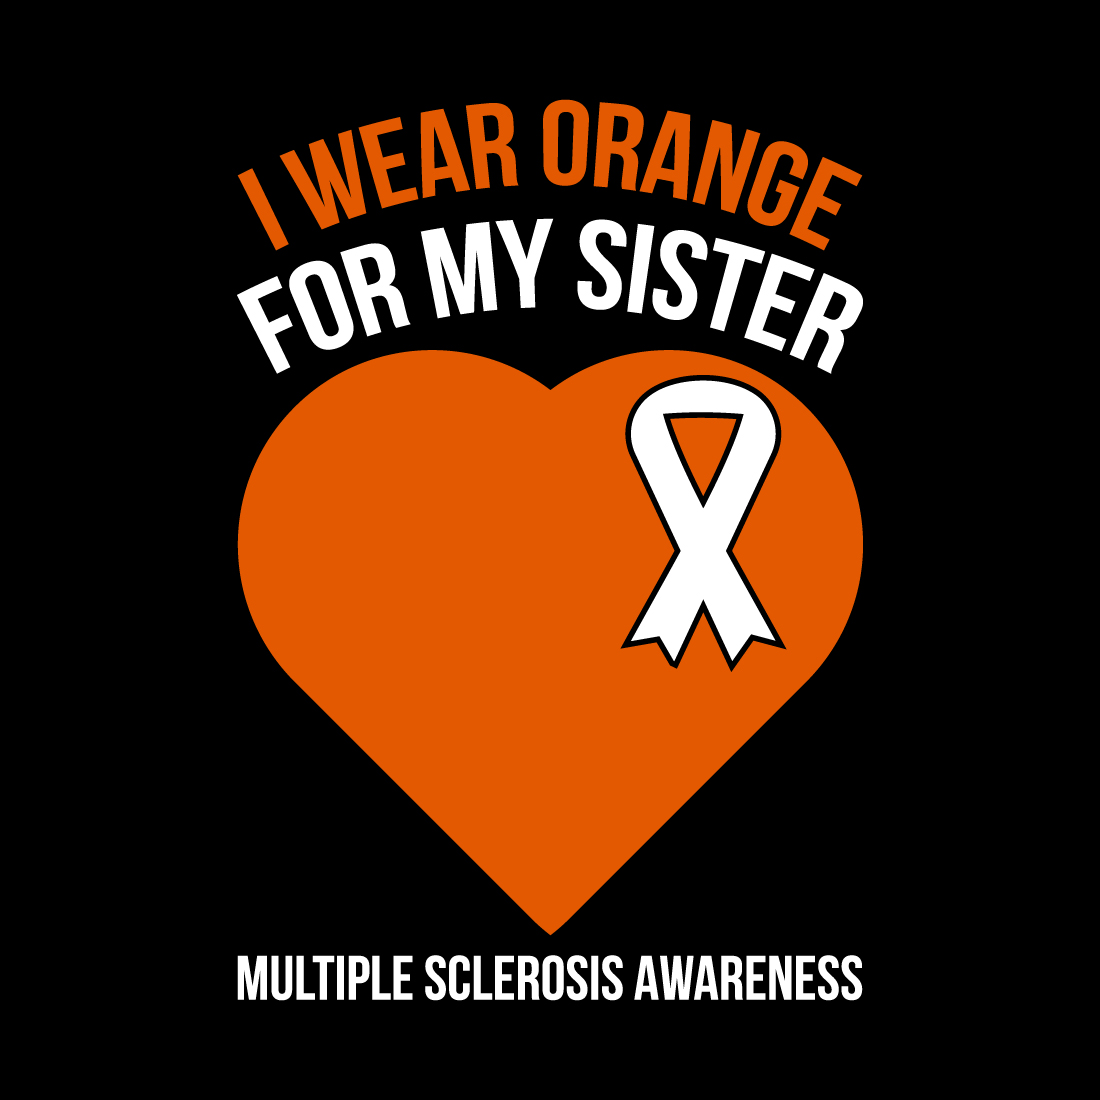 I wear orange for my sister multiple sclerosis awareness.